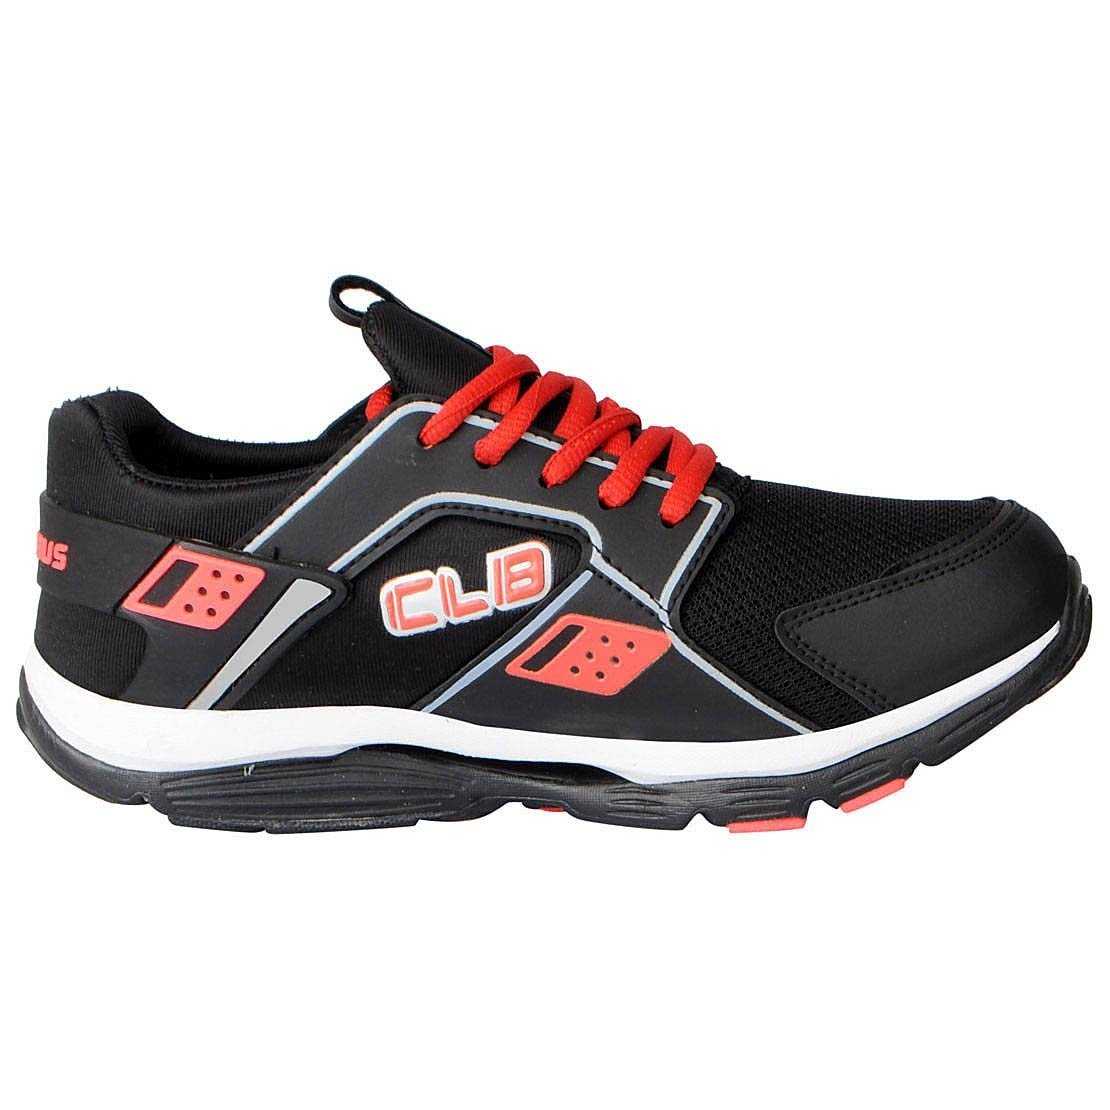 Columbus Men's KP-4 Black Red Sports Running Shoes